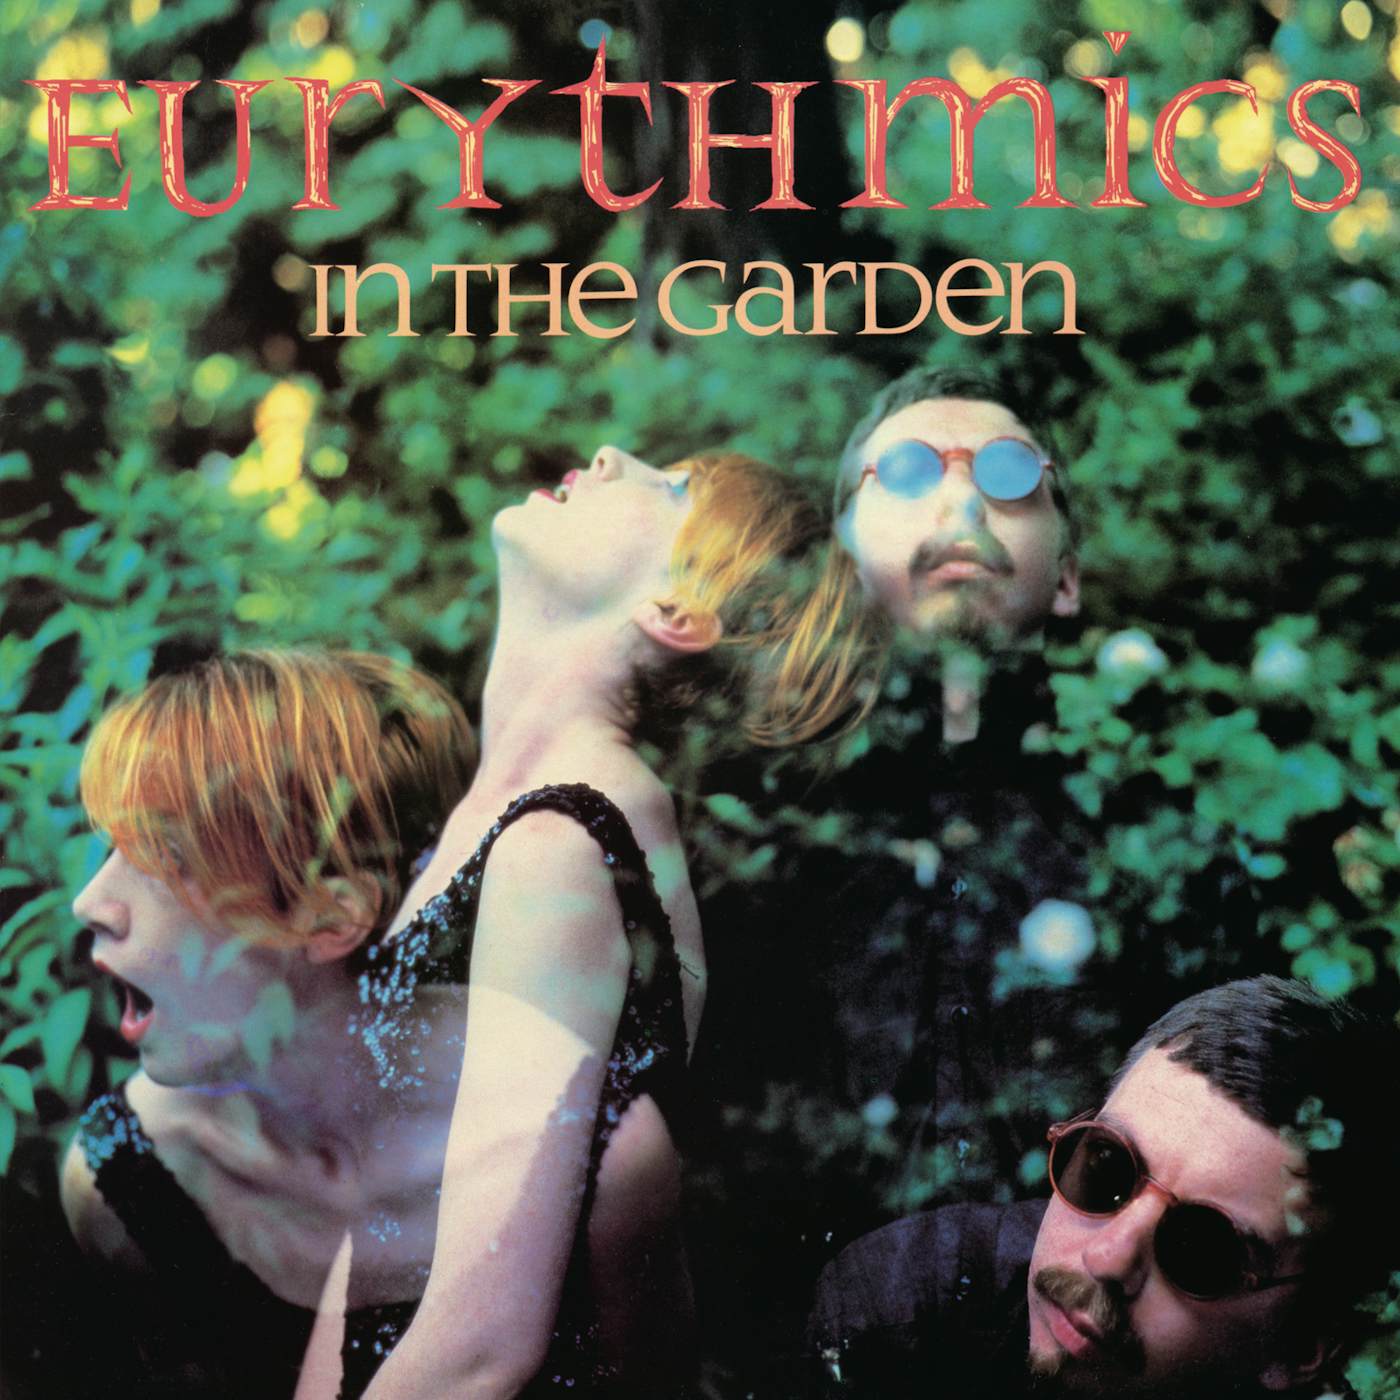 Eurythmics In The Garden Vinyl Record